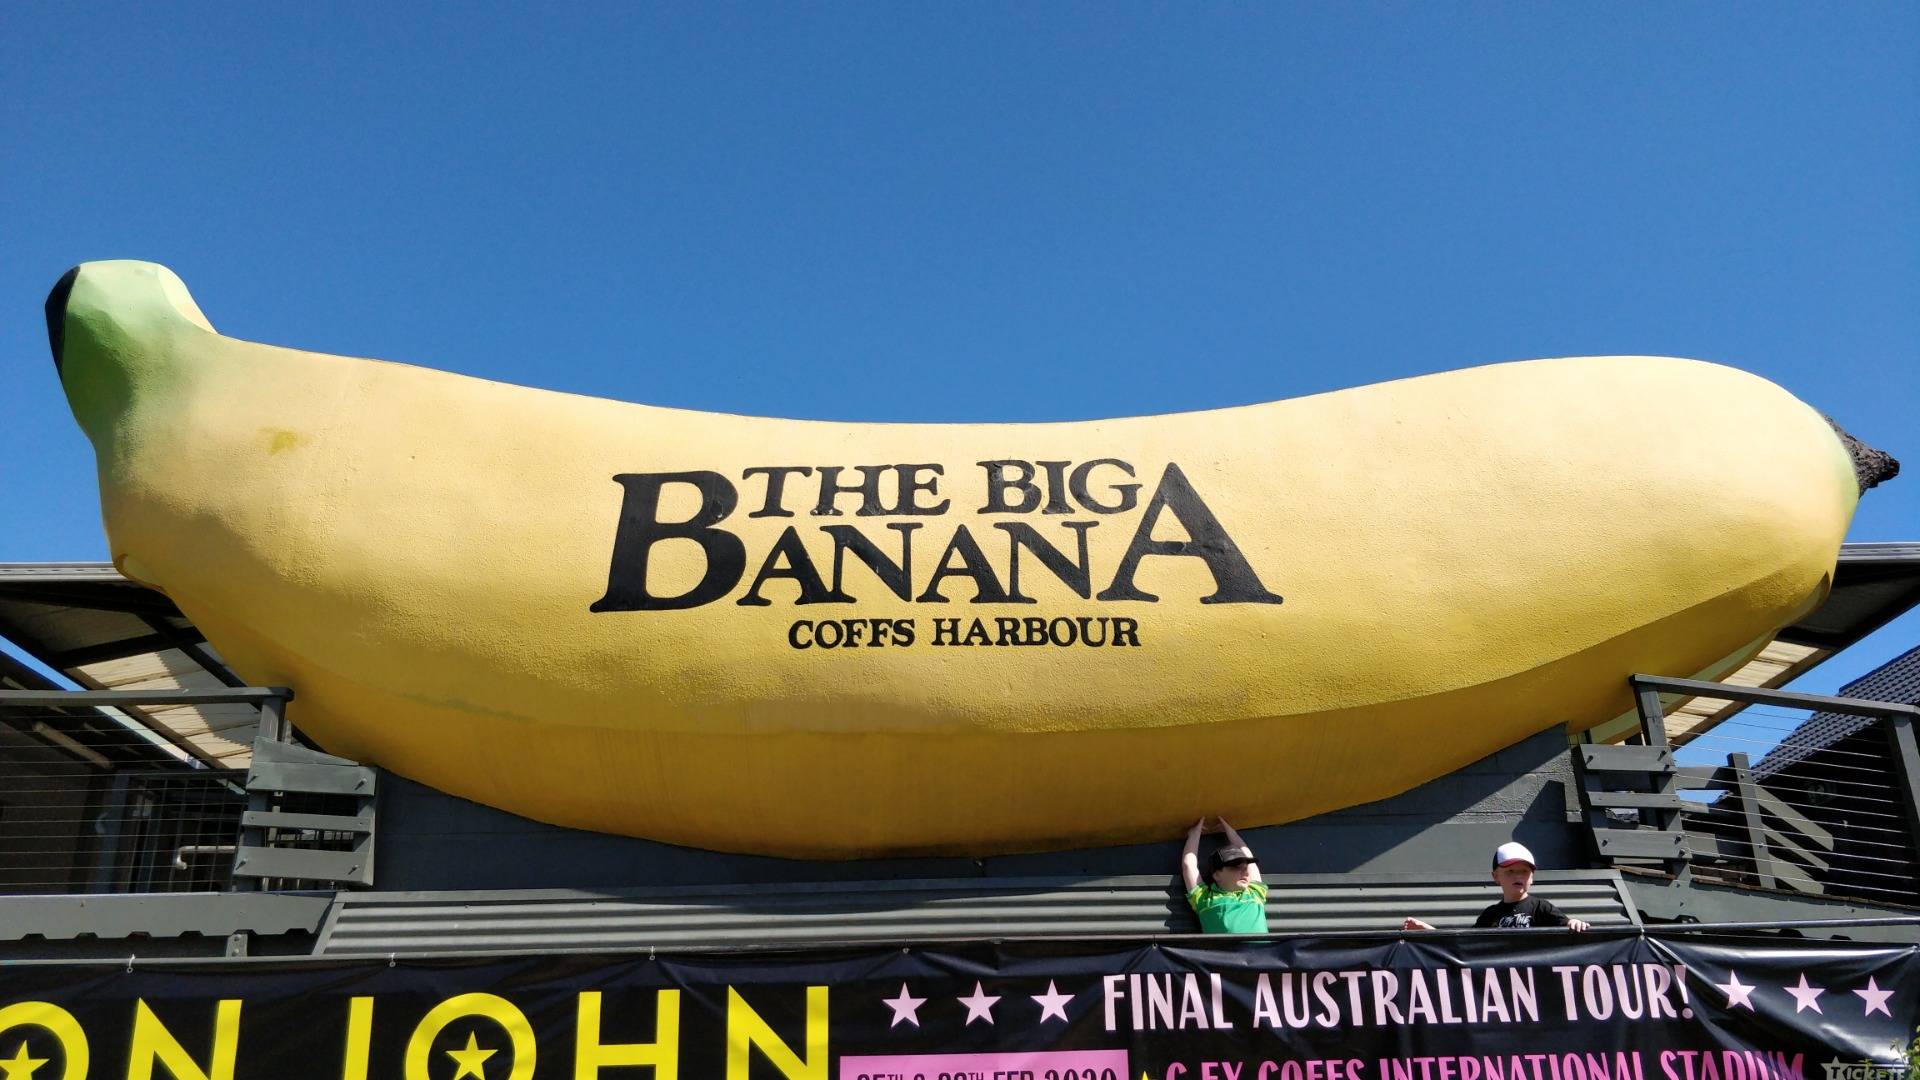 THE BIG BANANA: Coffs Harbour